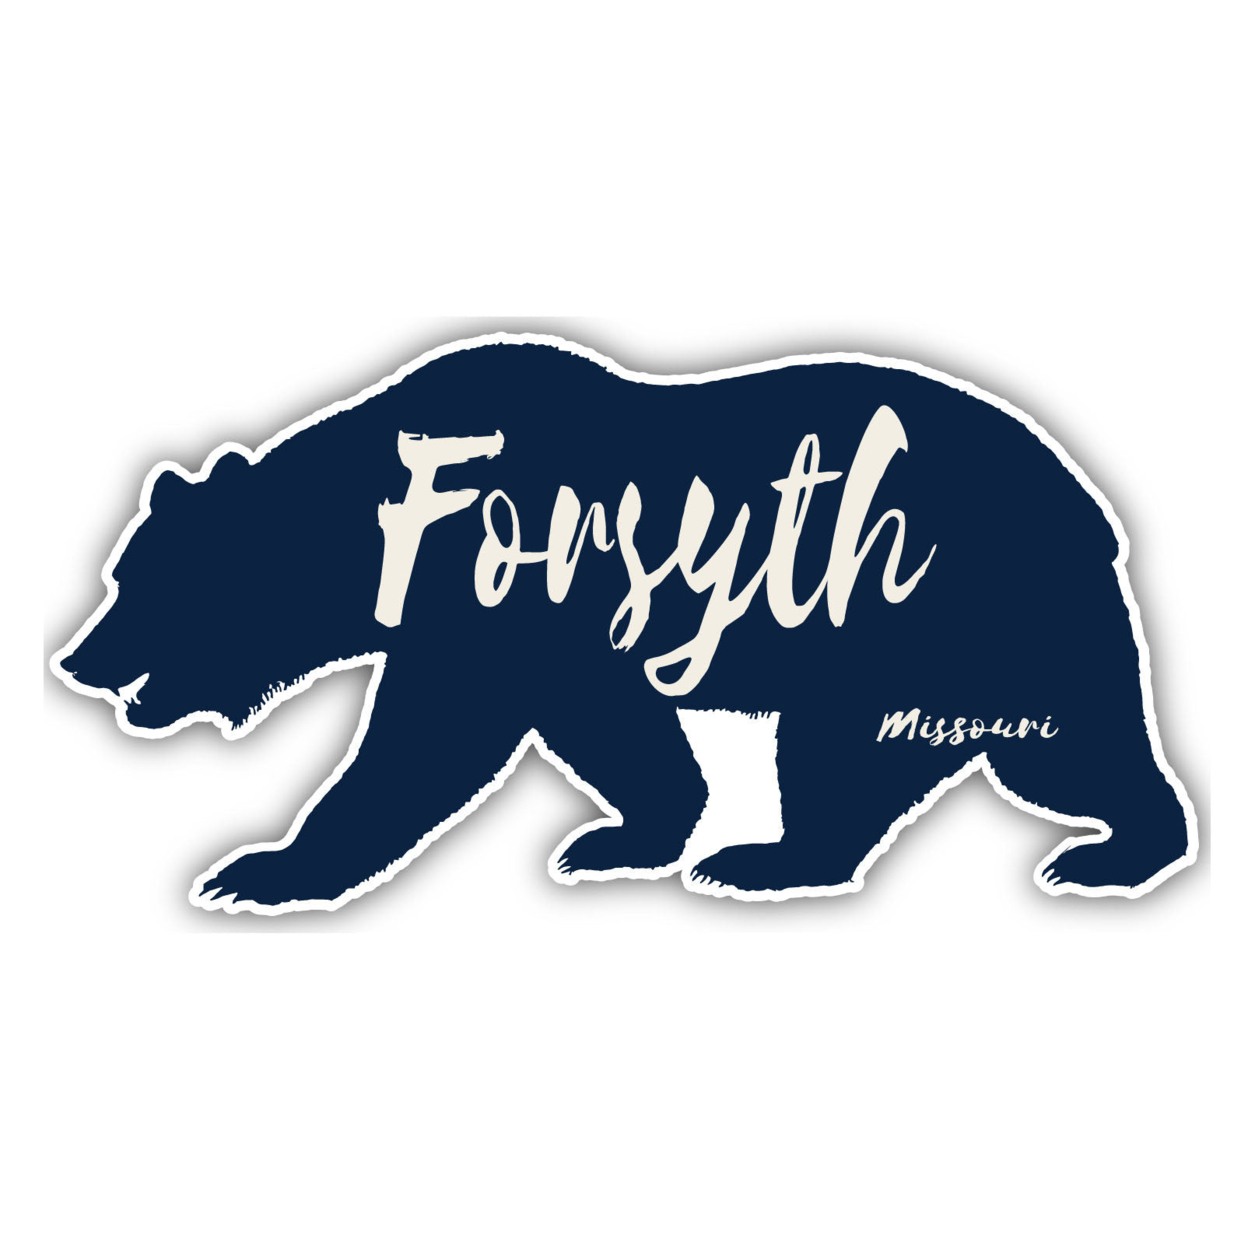 Forsyth Missouri Souvenir Decorative Stickers (Choose Theme And Size) - Single Unit, 10-Inch, Bear